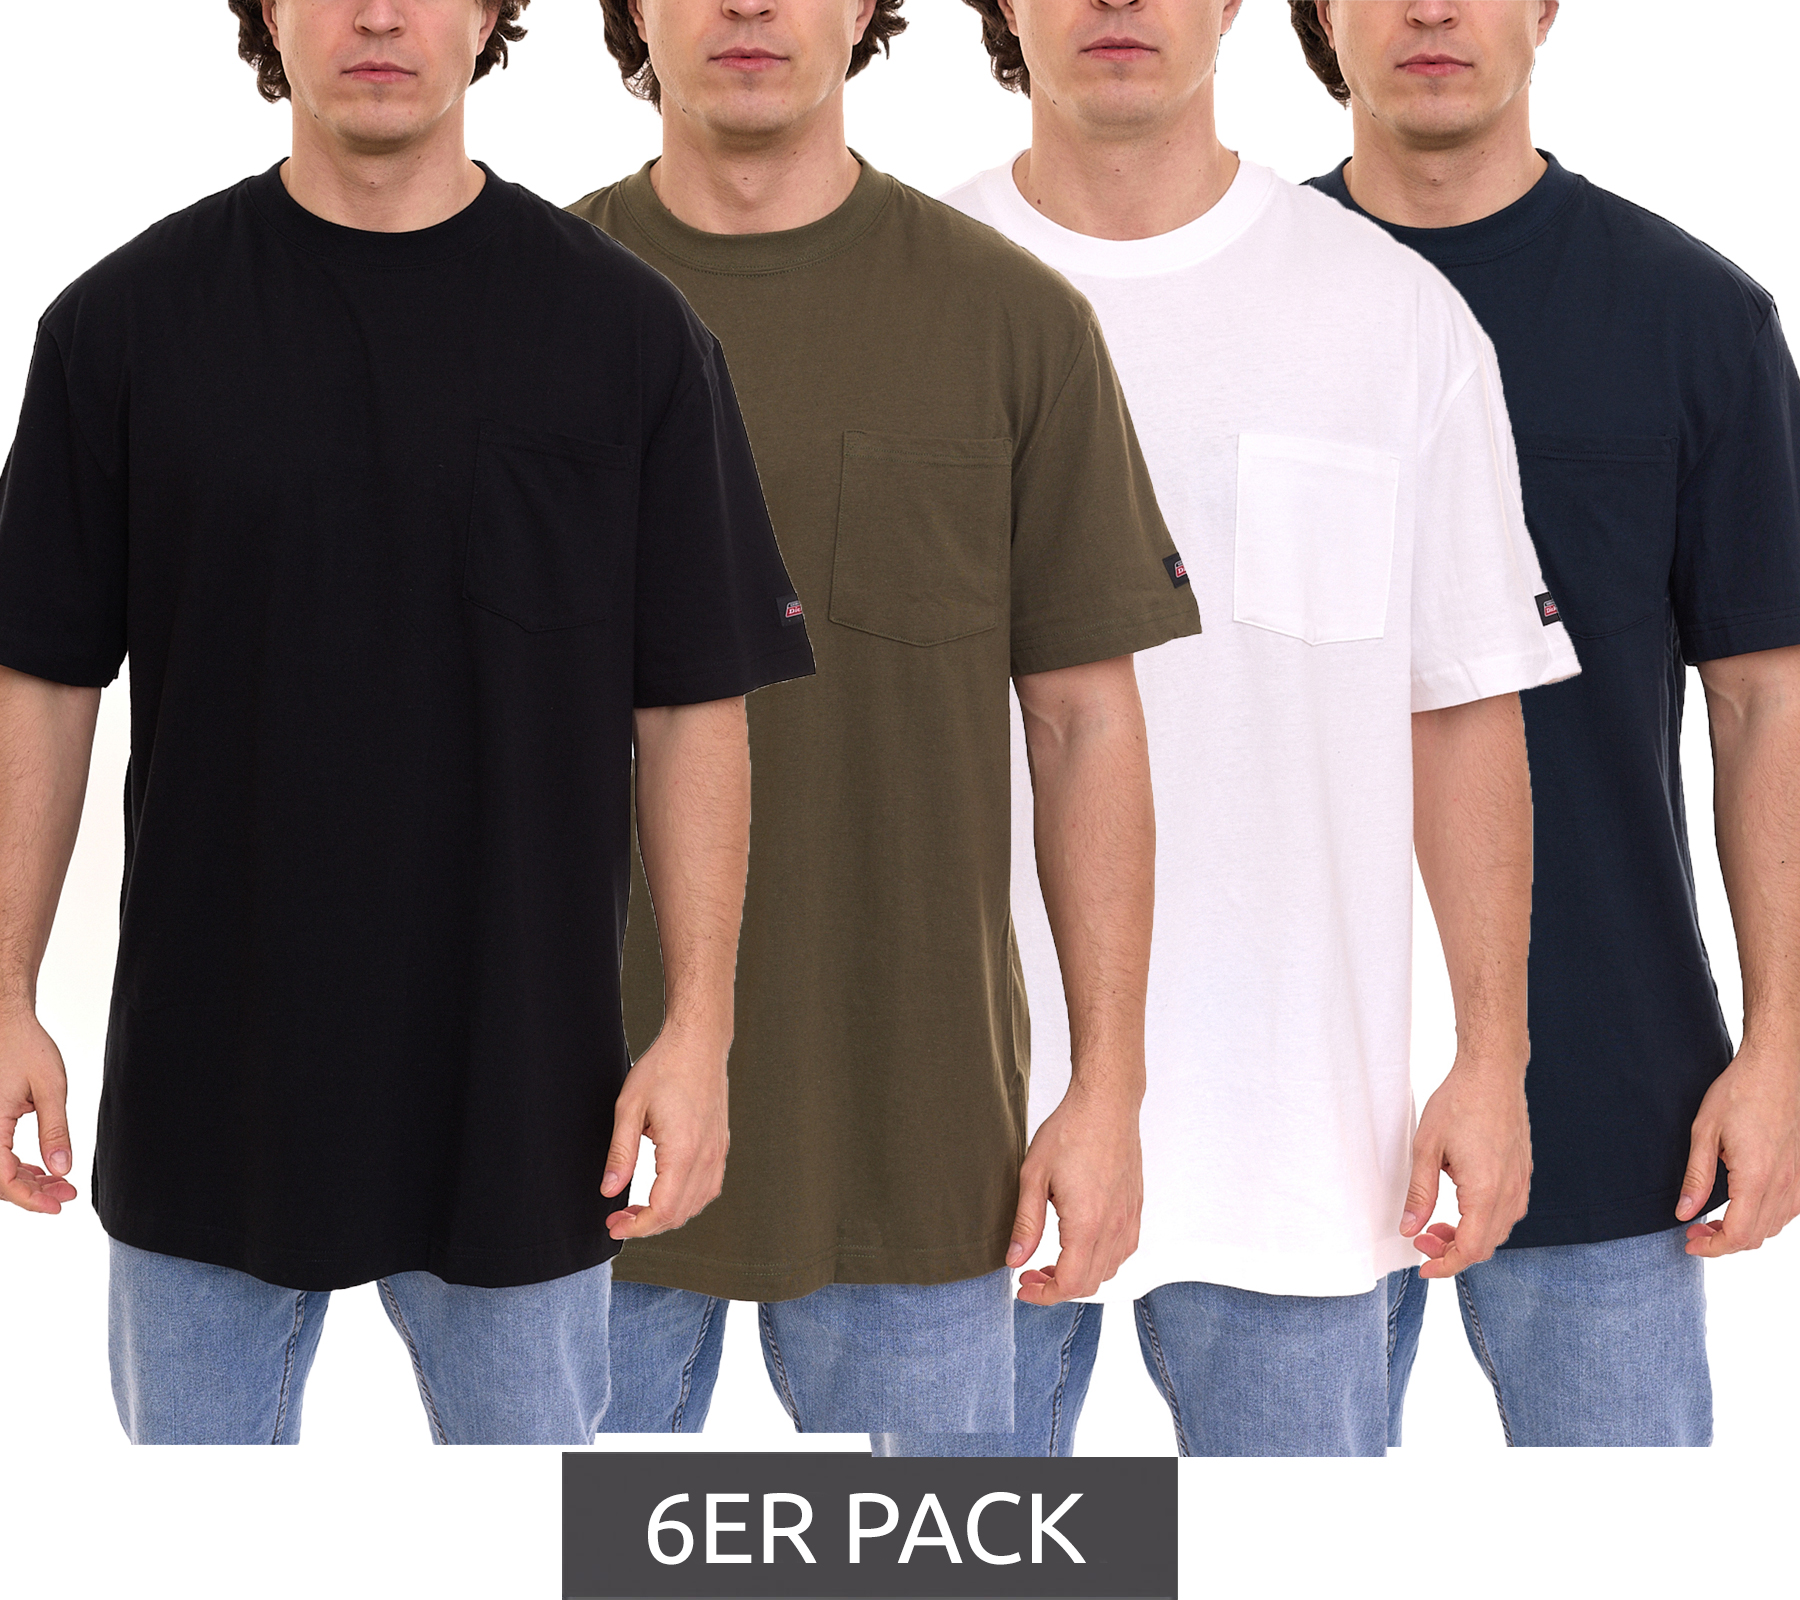 6er Pack Dickies Basic Herren T-Shirt Baumwoll-Shirt Arbeits-Shirt Cool&Dry Grammatur 250 g/m² PKGS407 in Schwarz Weiß Grün Blau